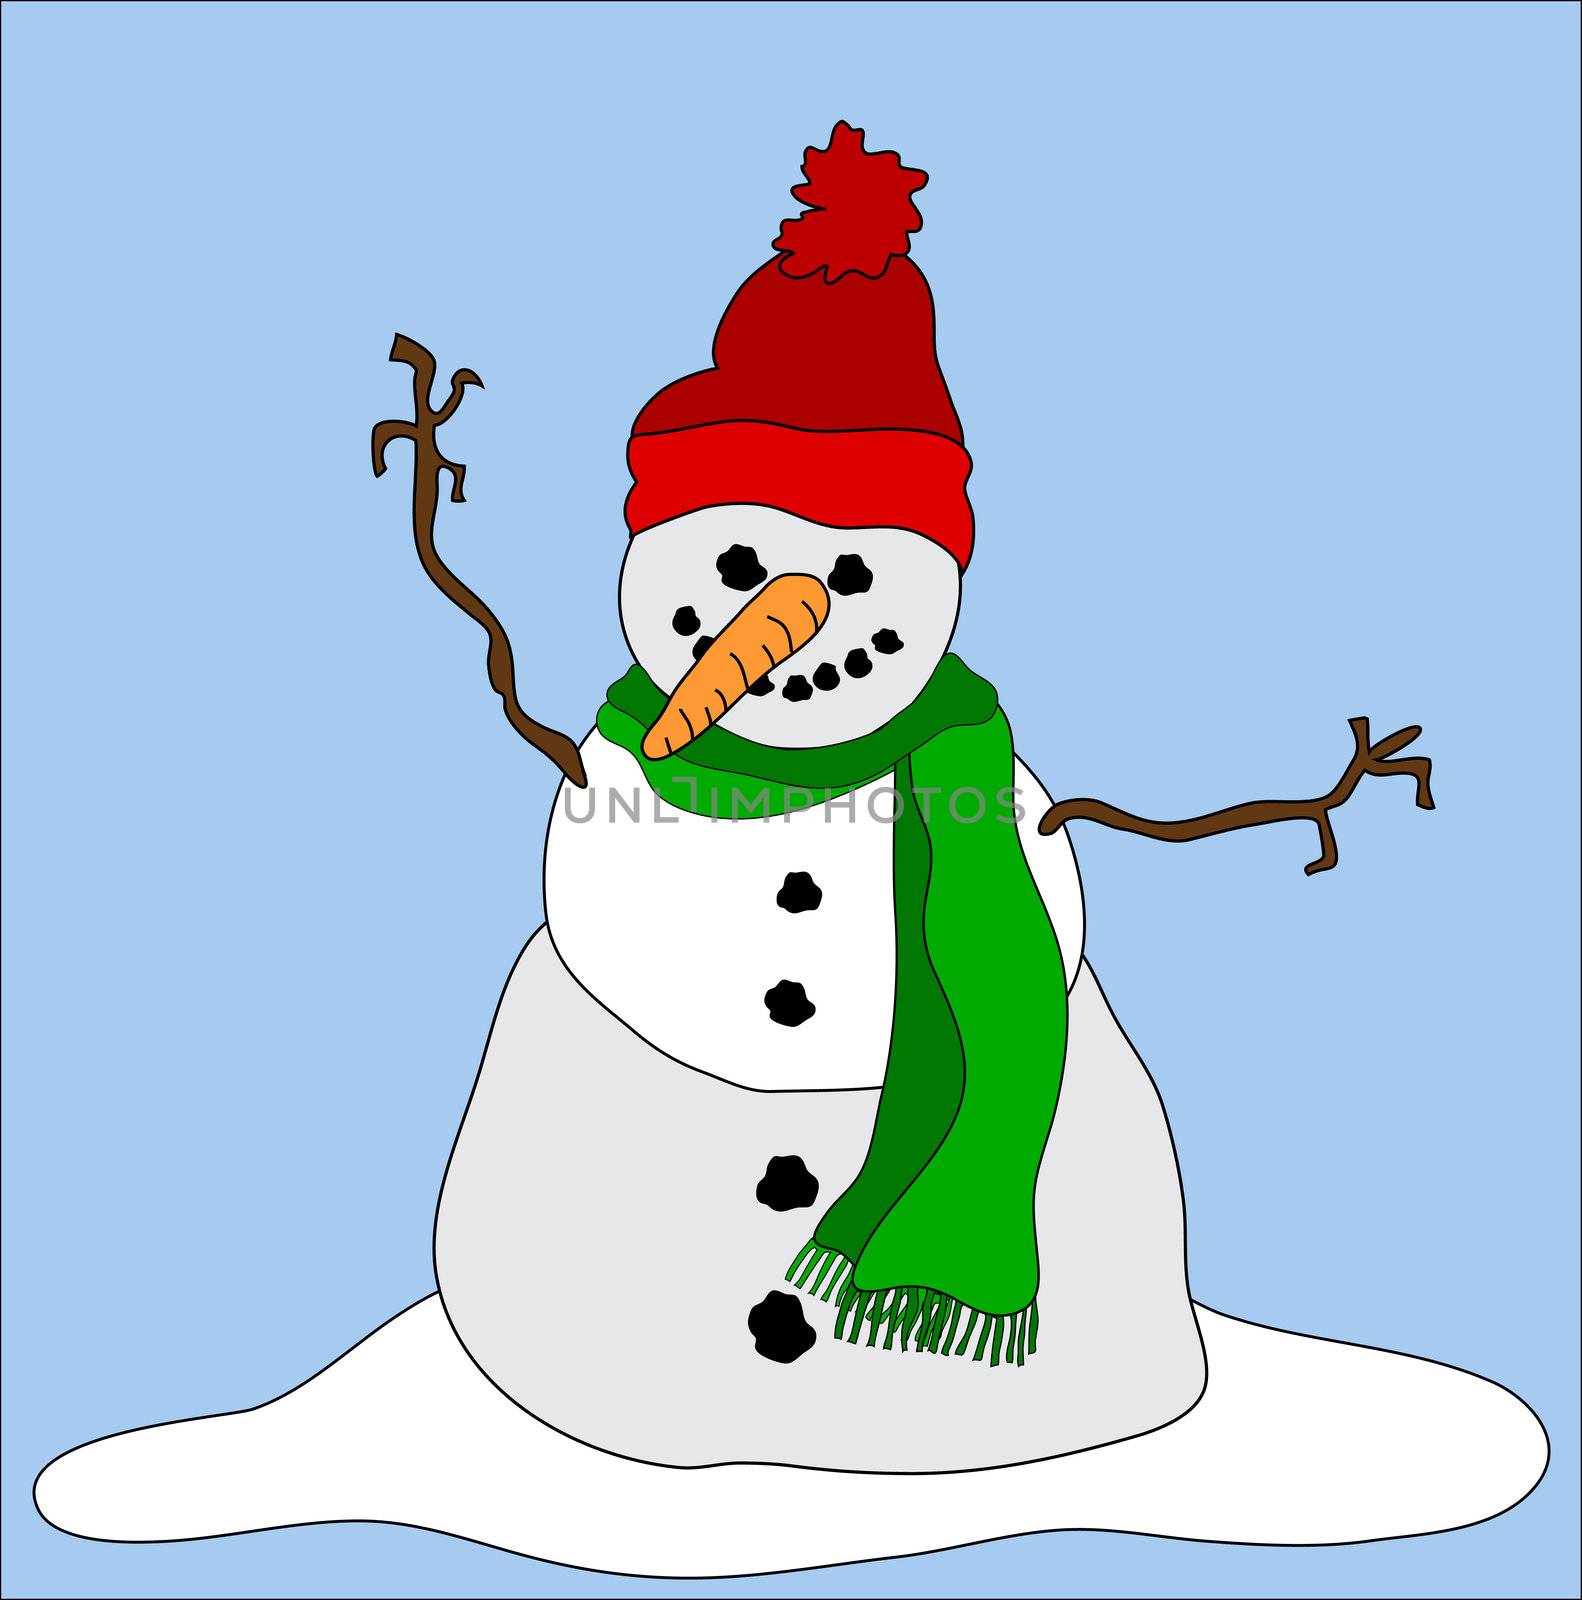 Snowman Illustration by peromarketing